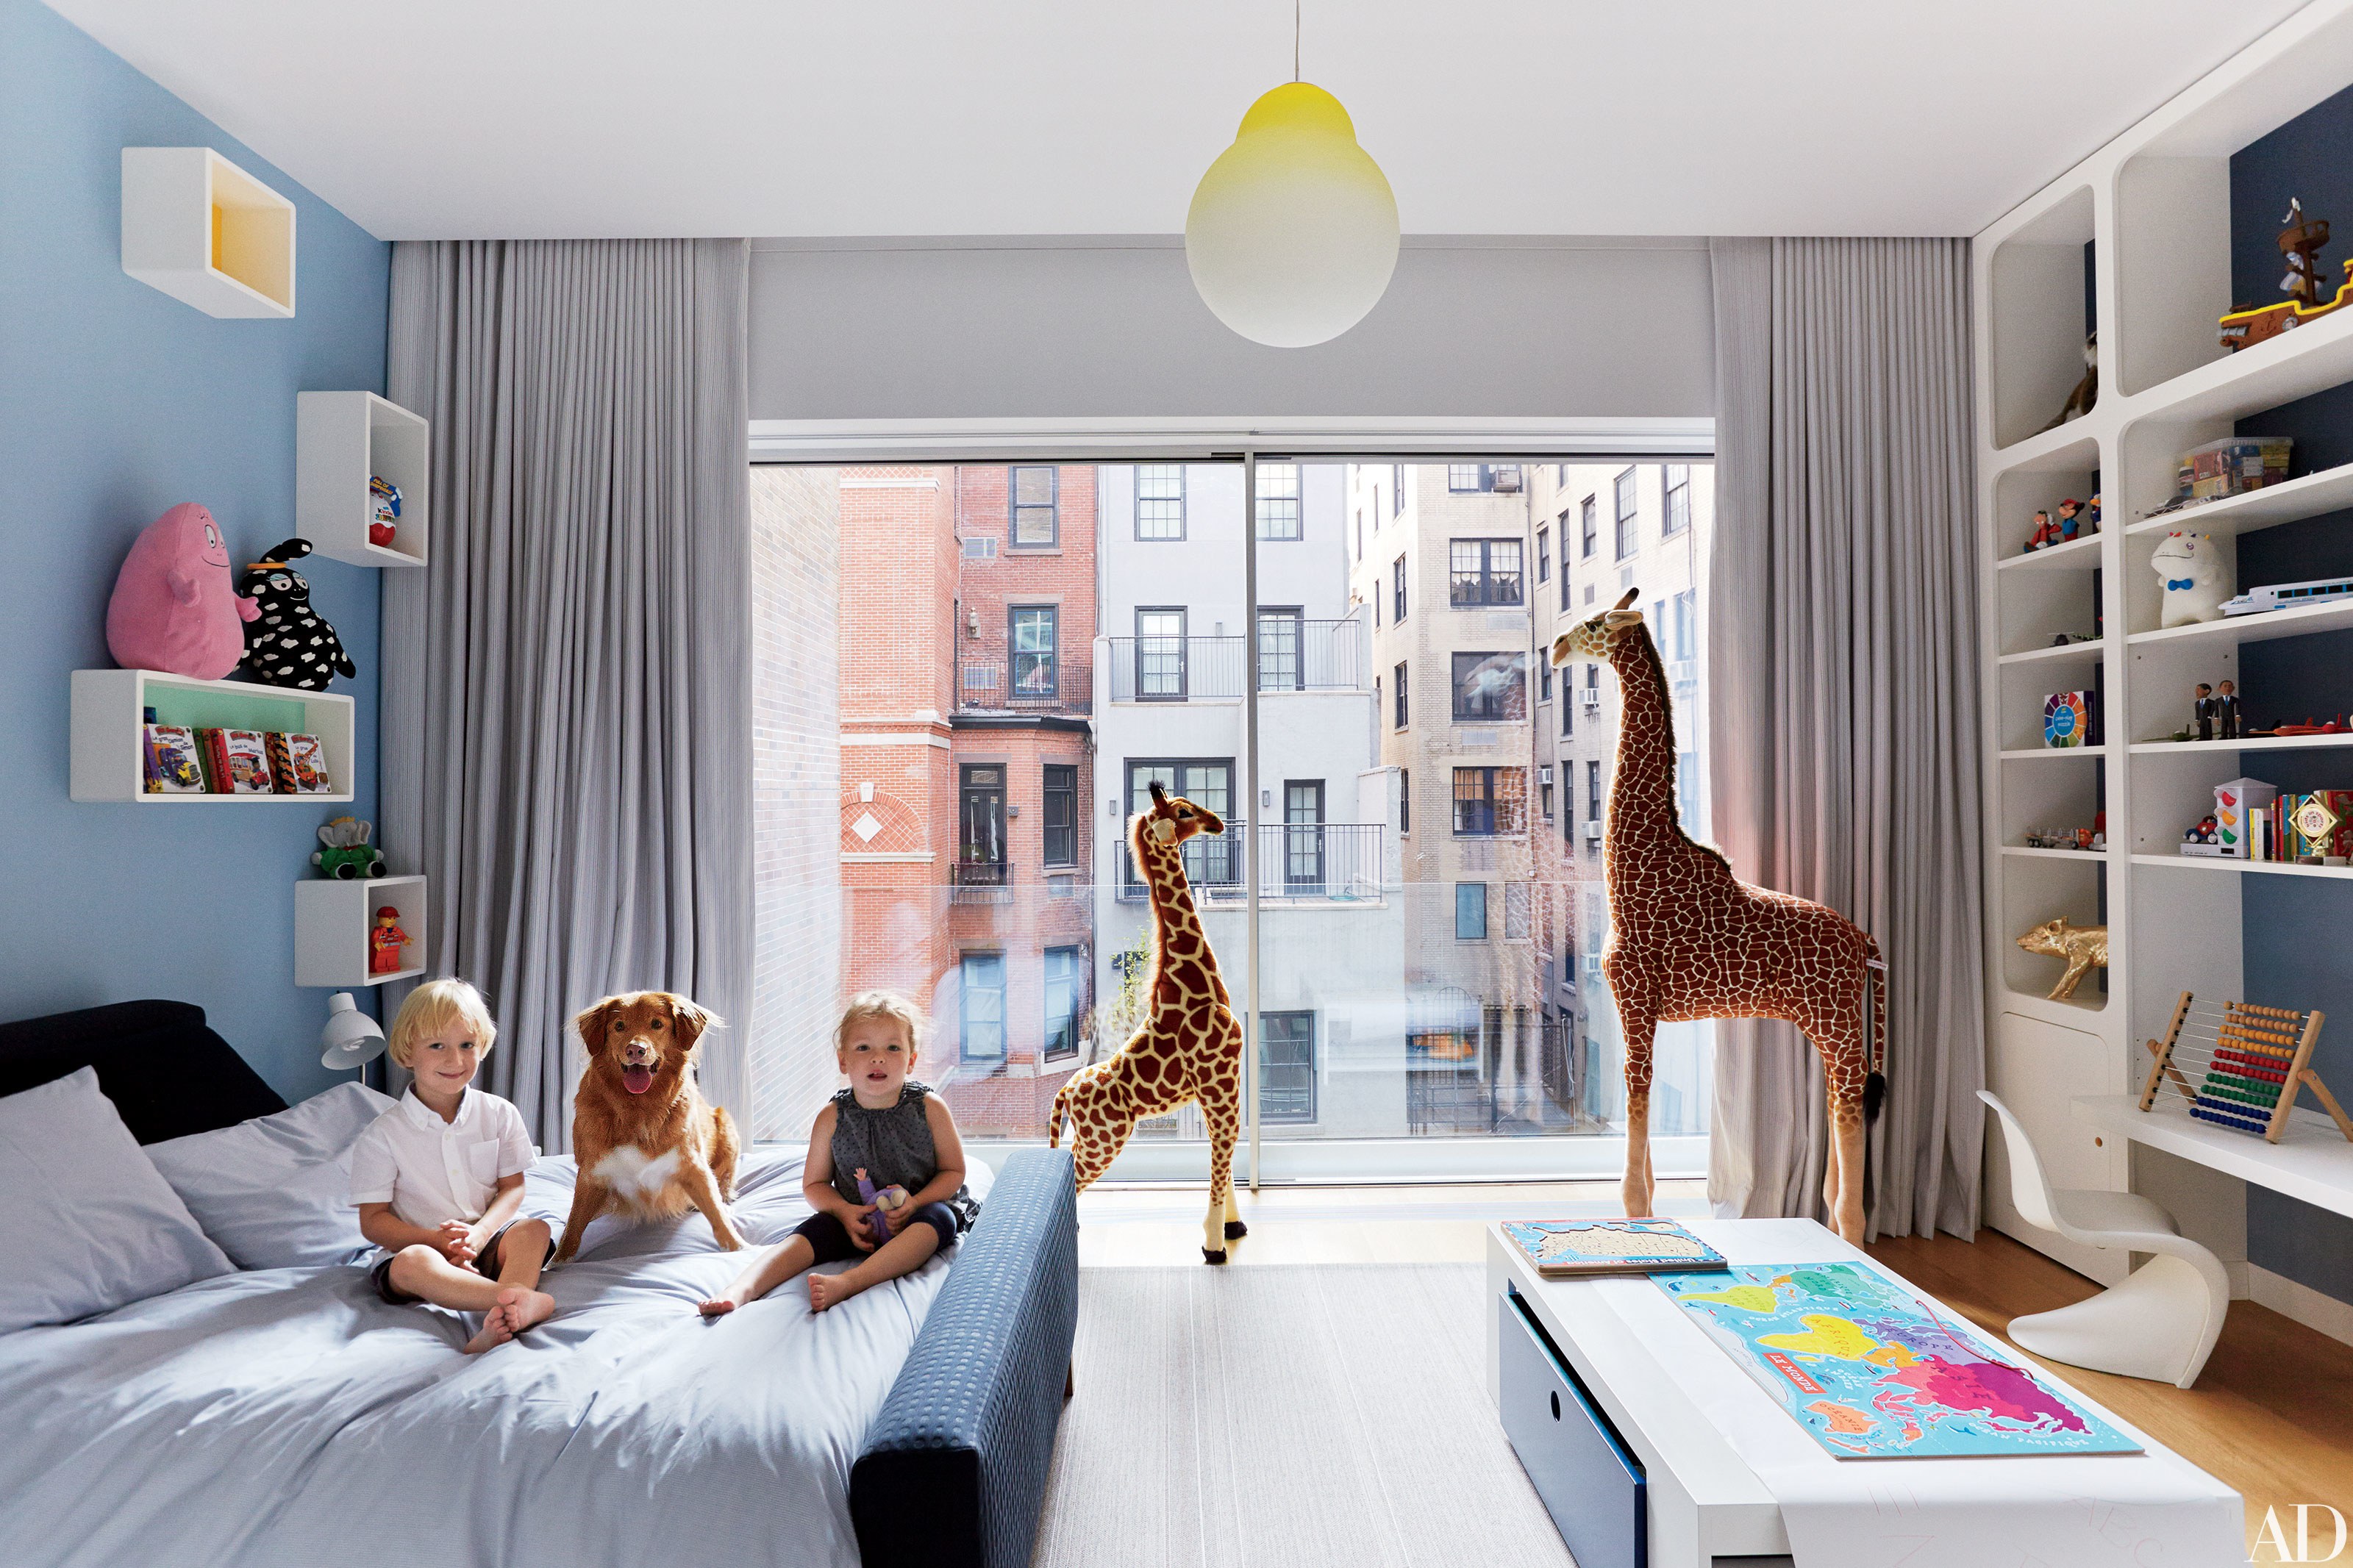 kids room design 54 stylish kids bedroom u0026 nursery ideas photos | architectural digest HZVGCZJ